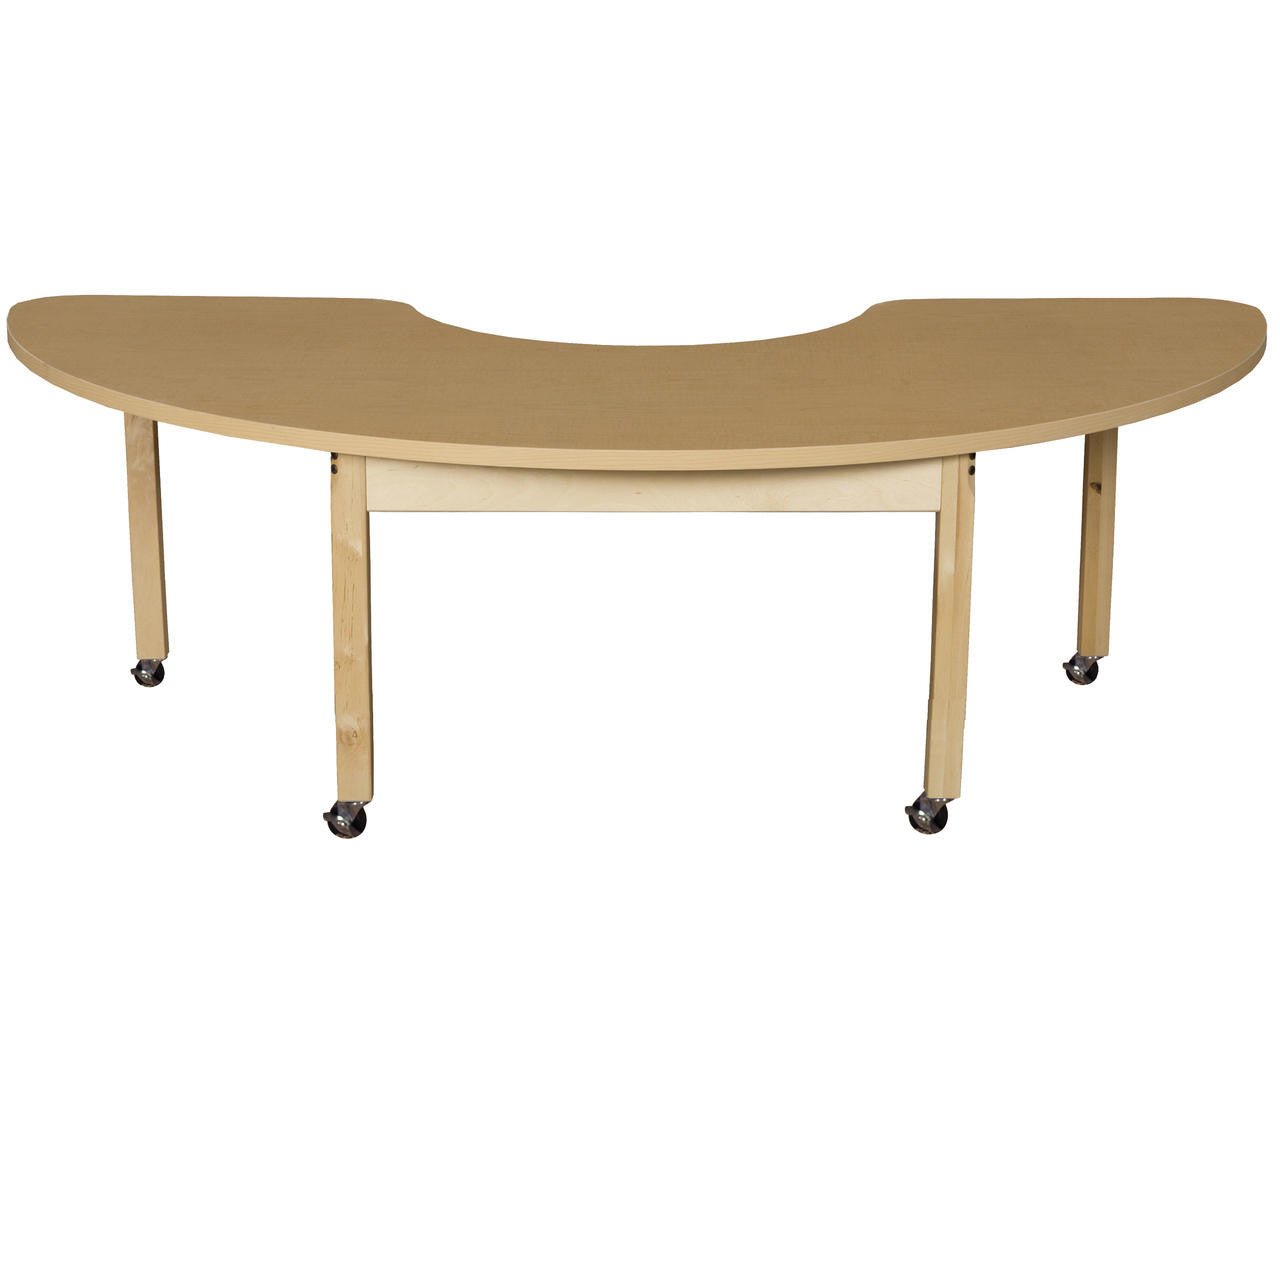 Mobile Half Circle High Pressure Laminate Table with Hardwood Legs 18"